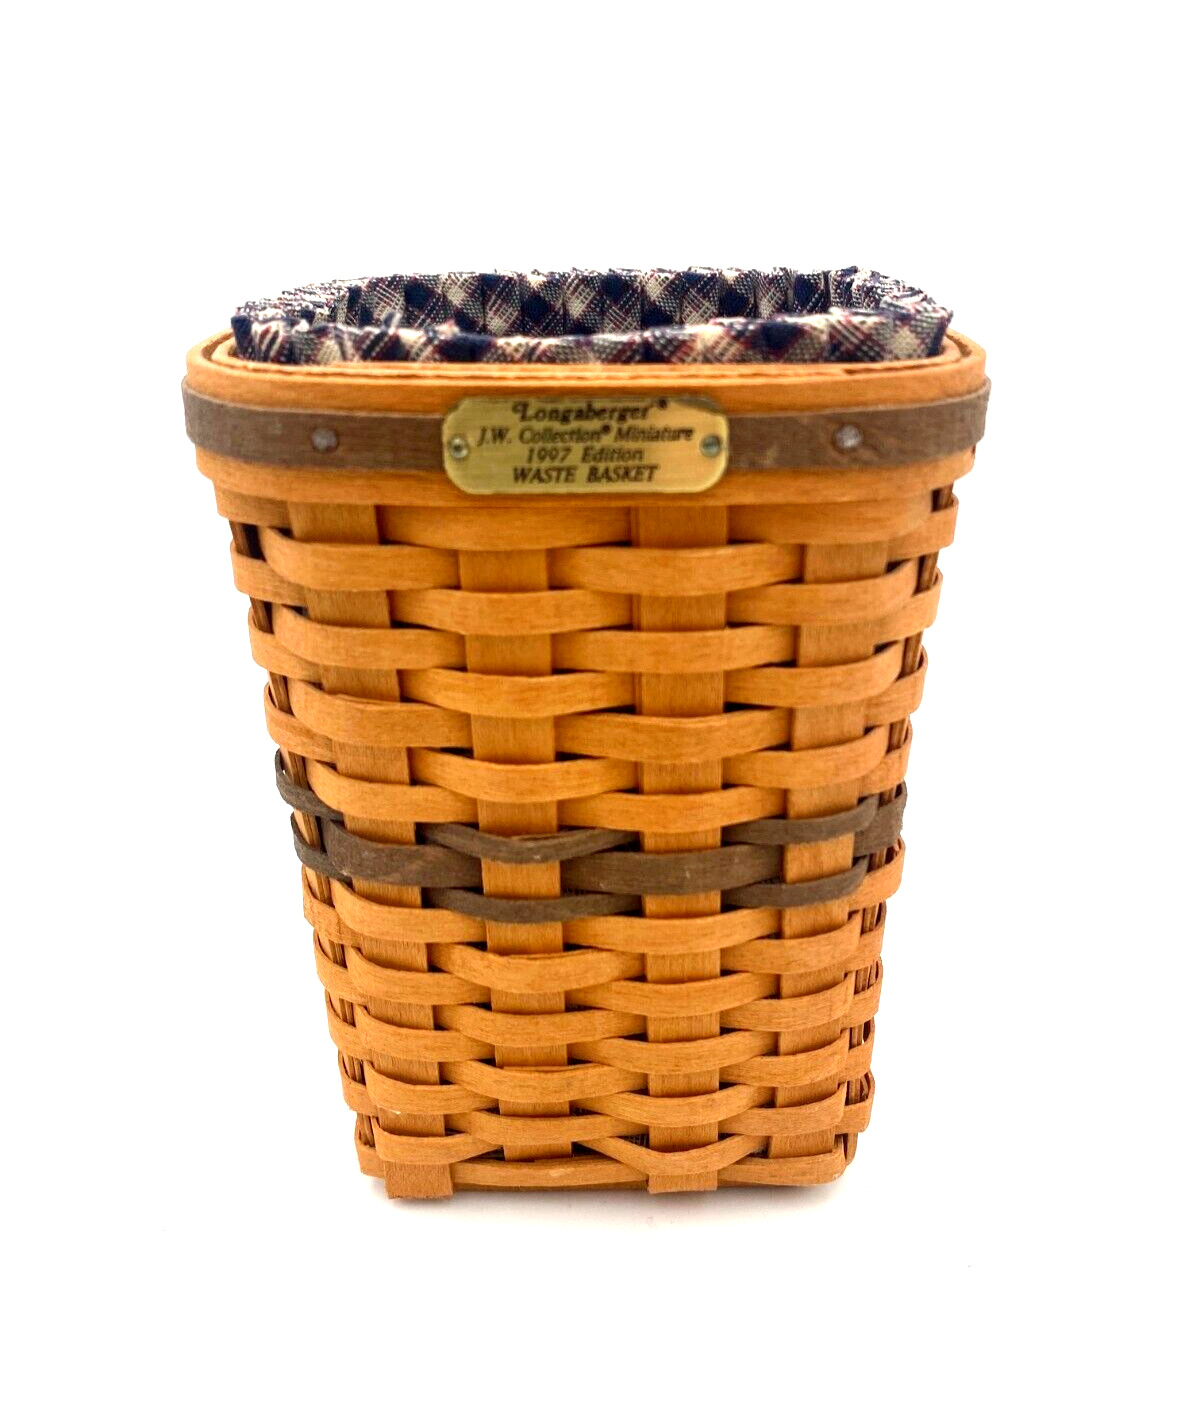 Longaberger JW Collection Miniature 1997 Edition Waste Basket